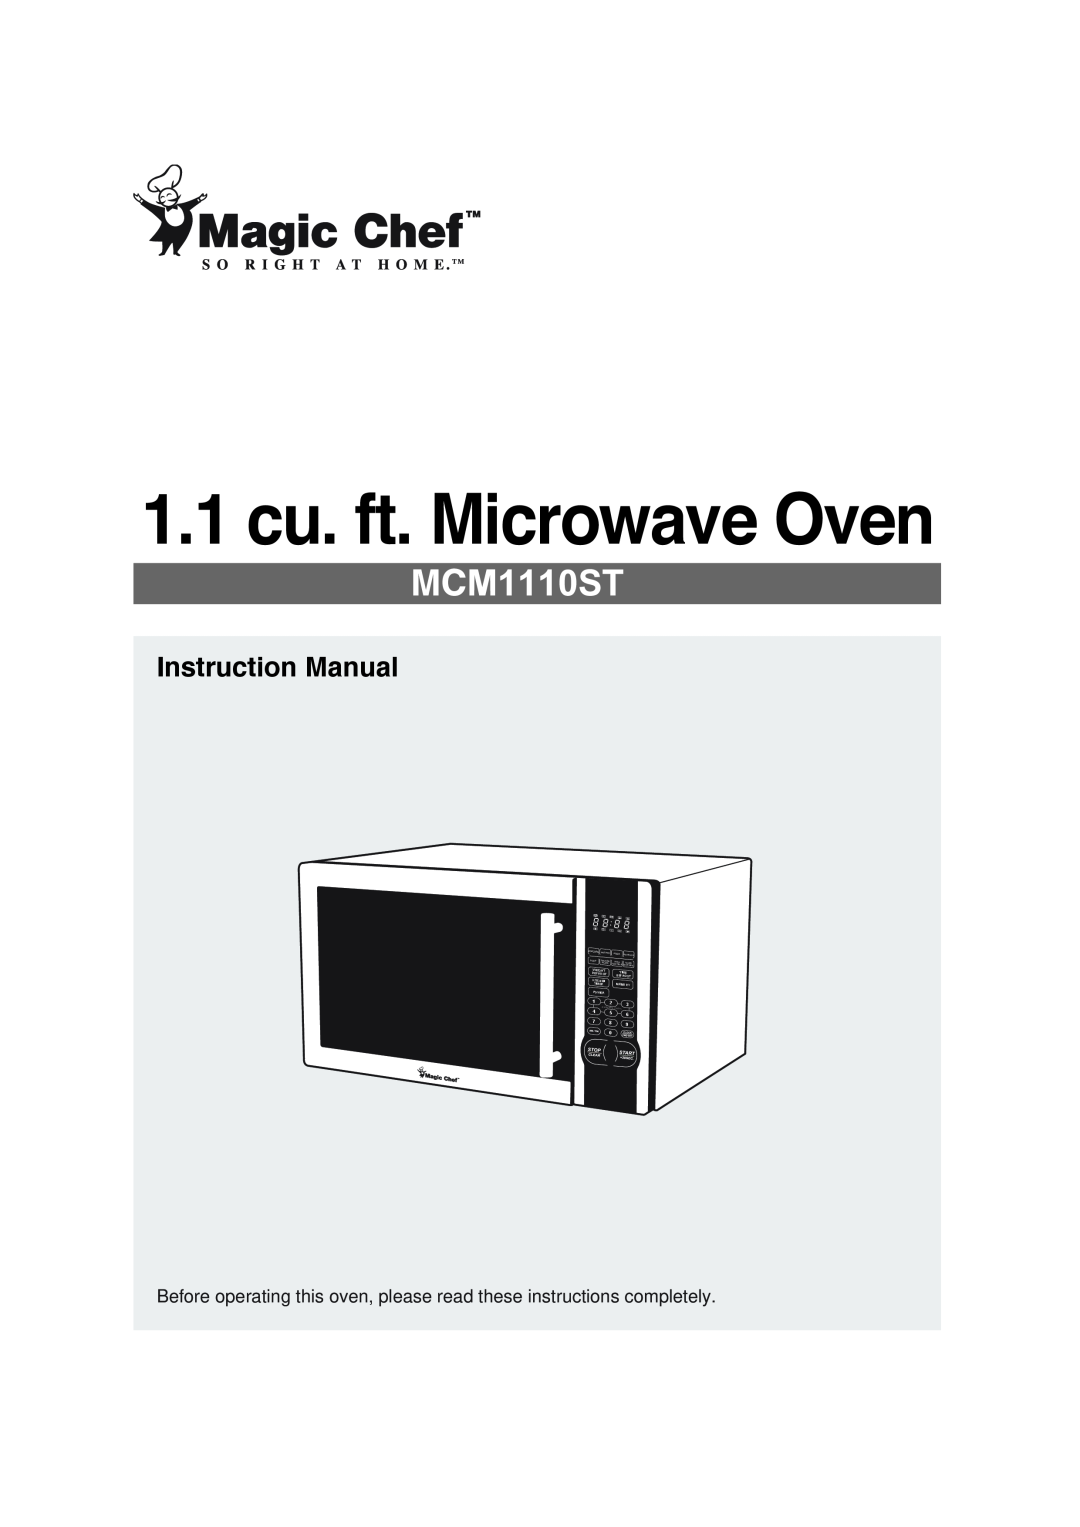 Magic Chef MCM1110ST instruction manual 1.1 cu. ft. Microwave Oven, Instruction Manual, Popcorn, Potato, Pizza, Fresh 